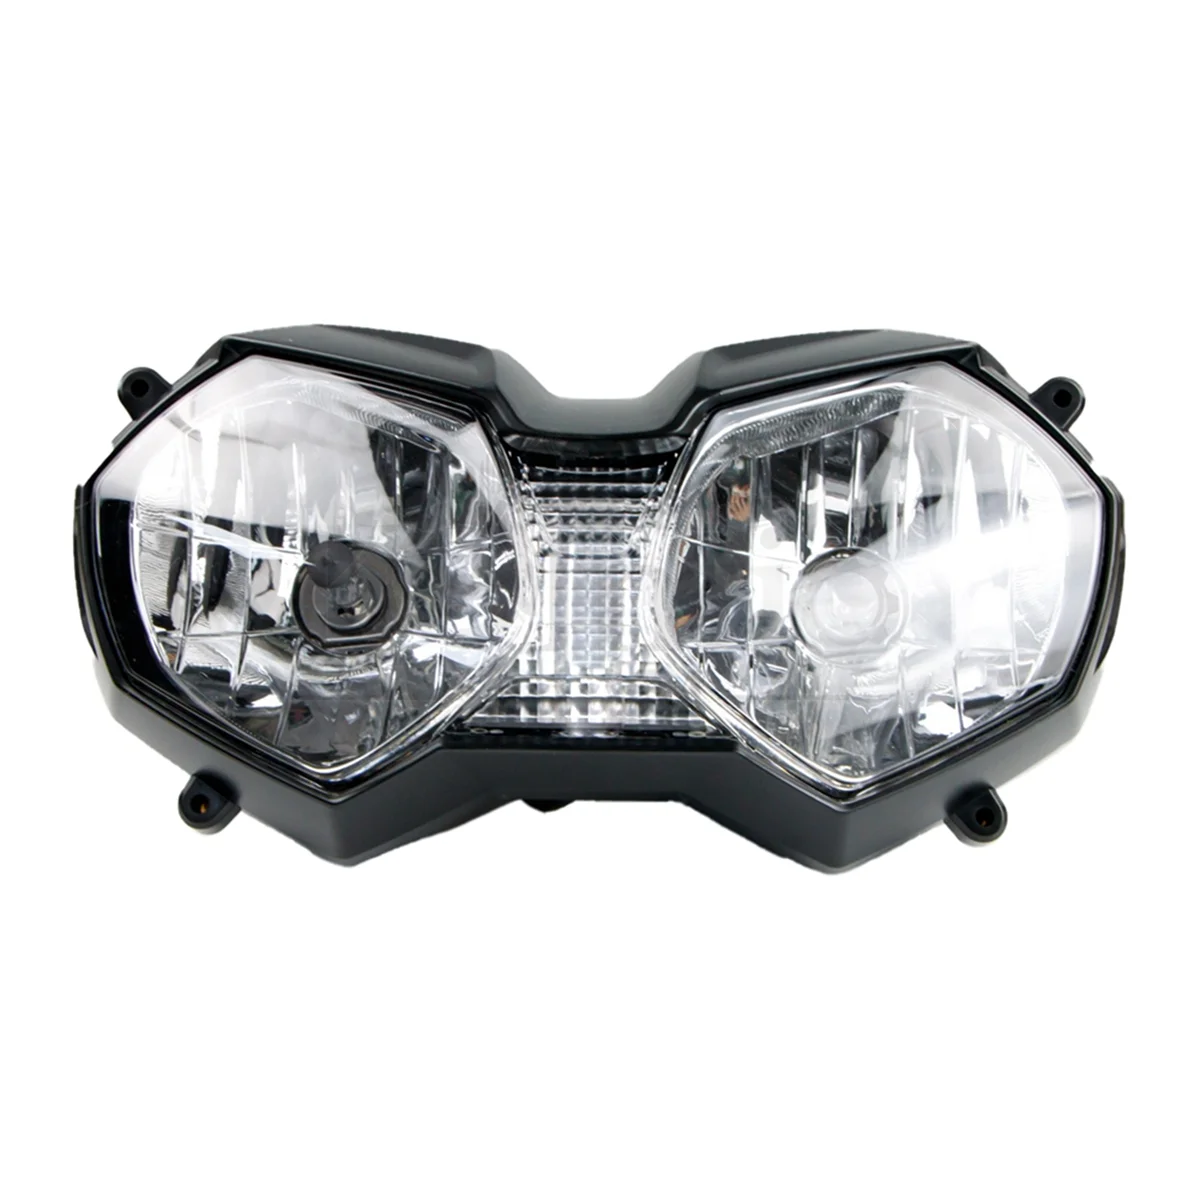 

Motorcycle Headlight Assembly Head Light Lamp for Triumph Tiger 800 1200 Explorer XC XCa XCx XR XRt XRx